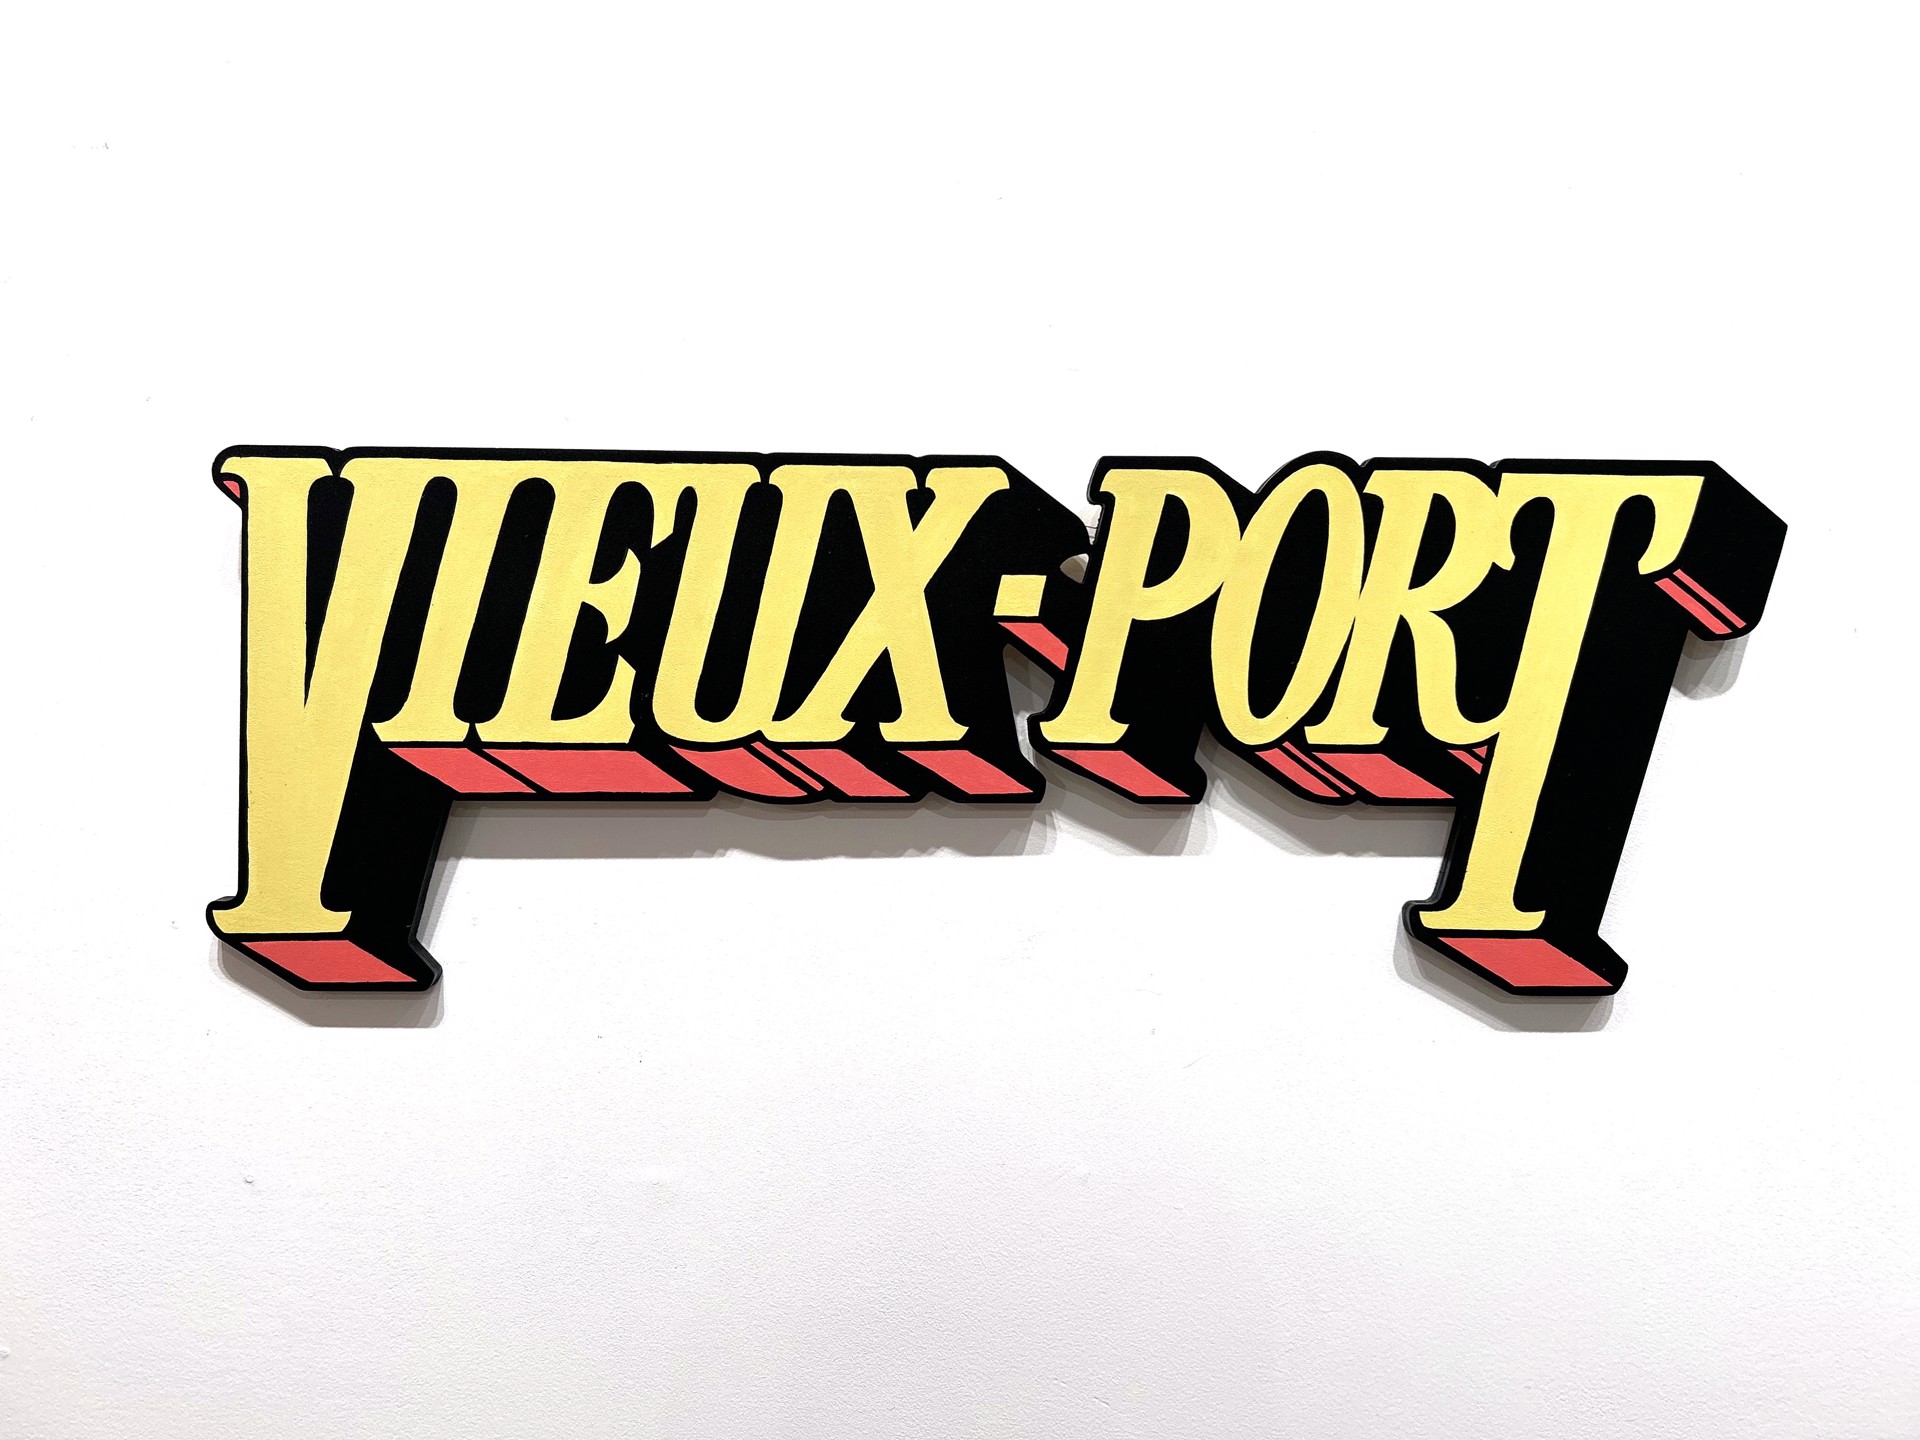 Vieux-Port by Jason Wasserman